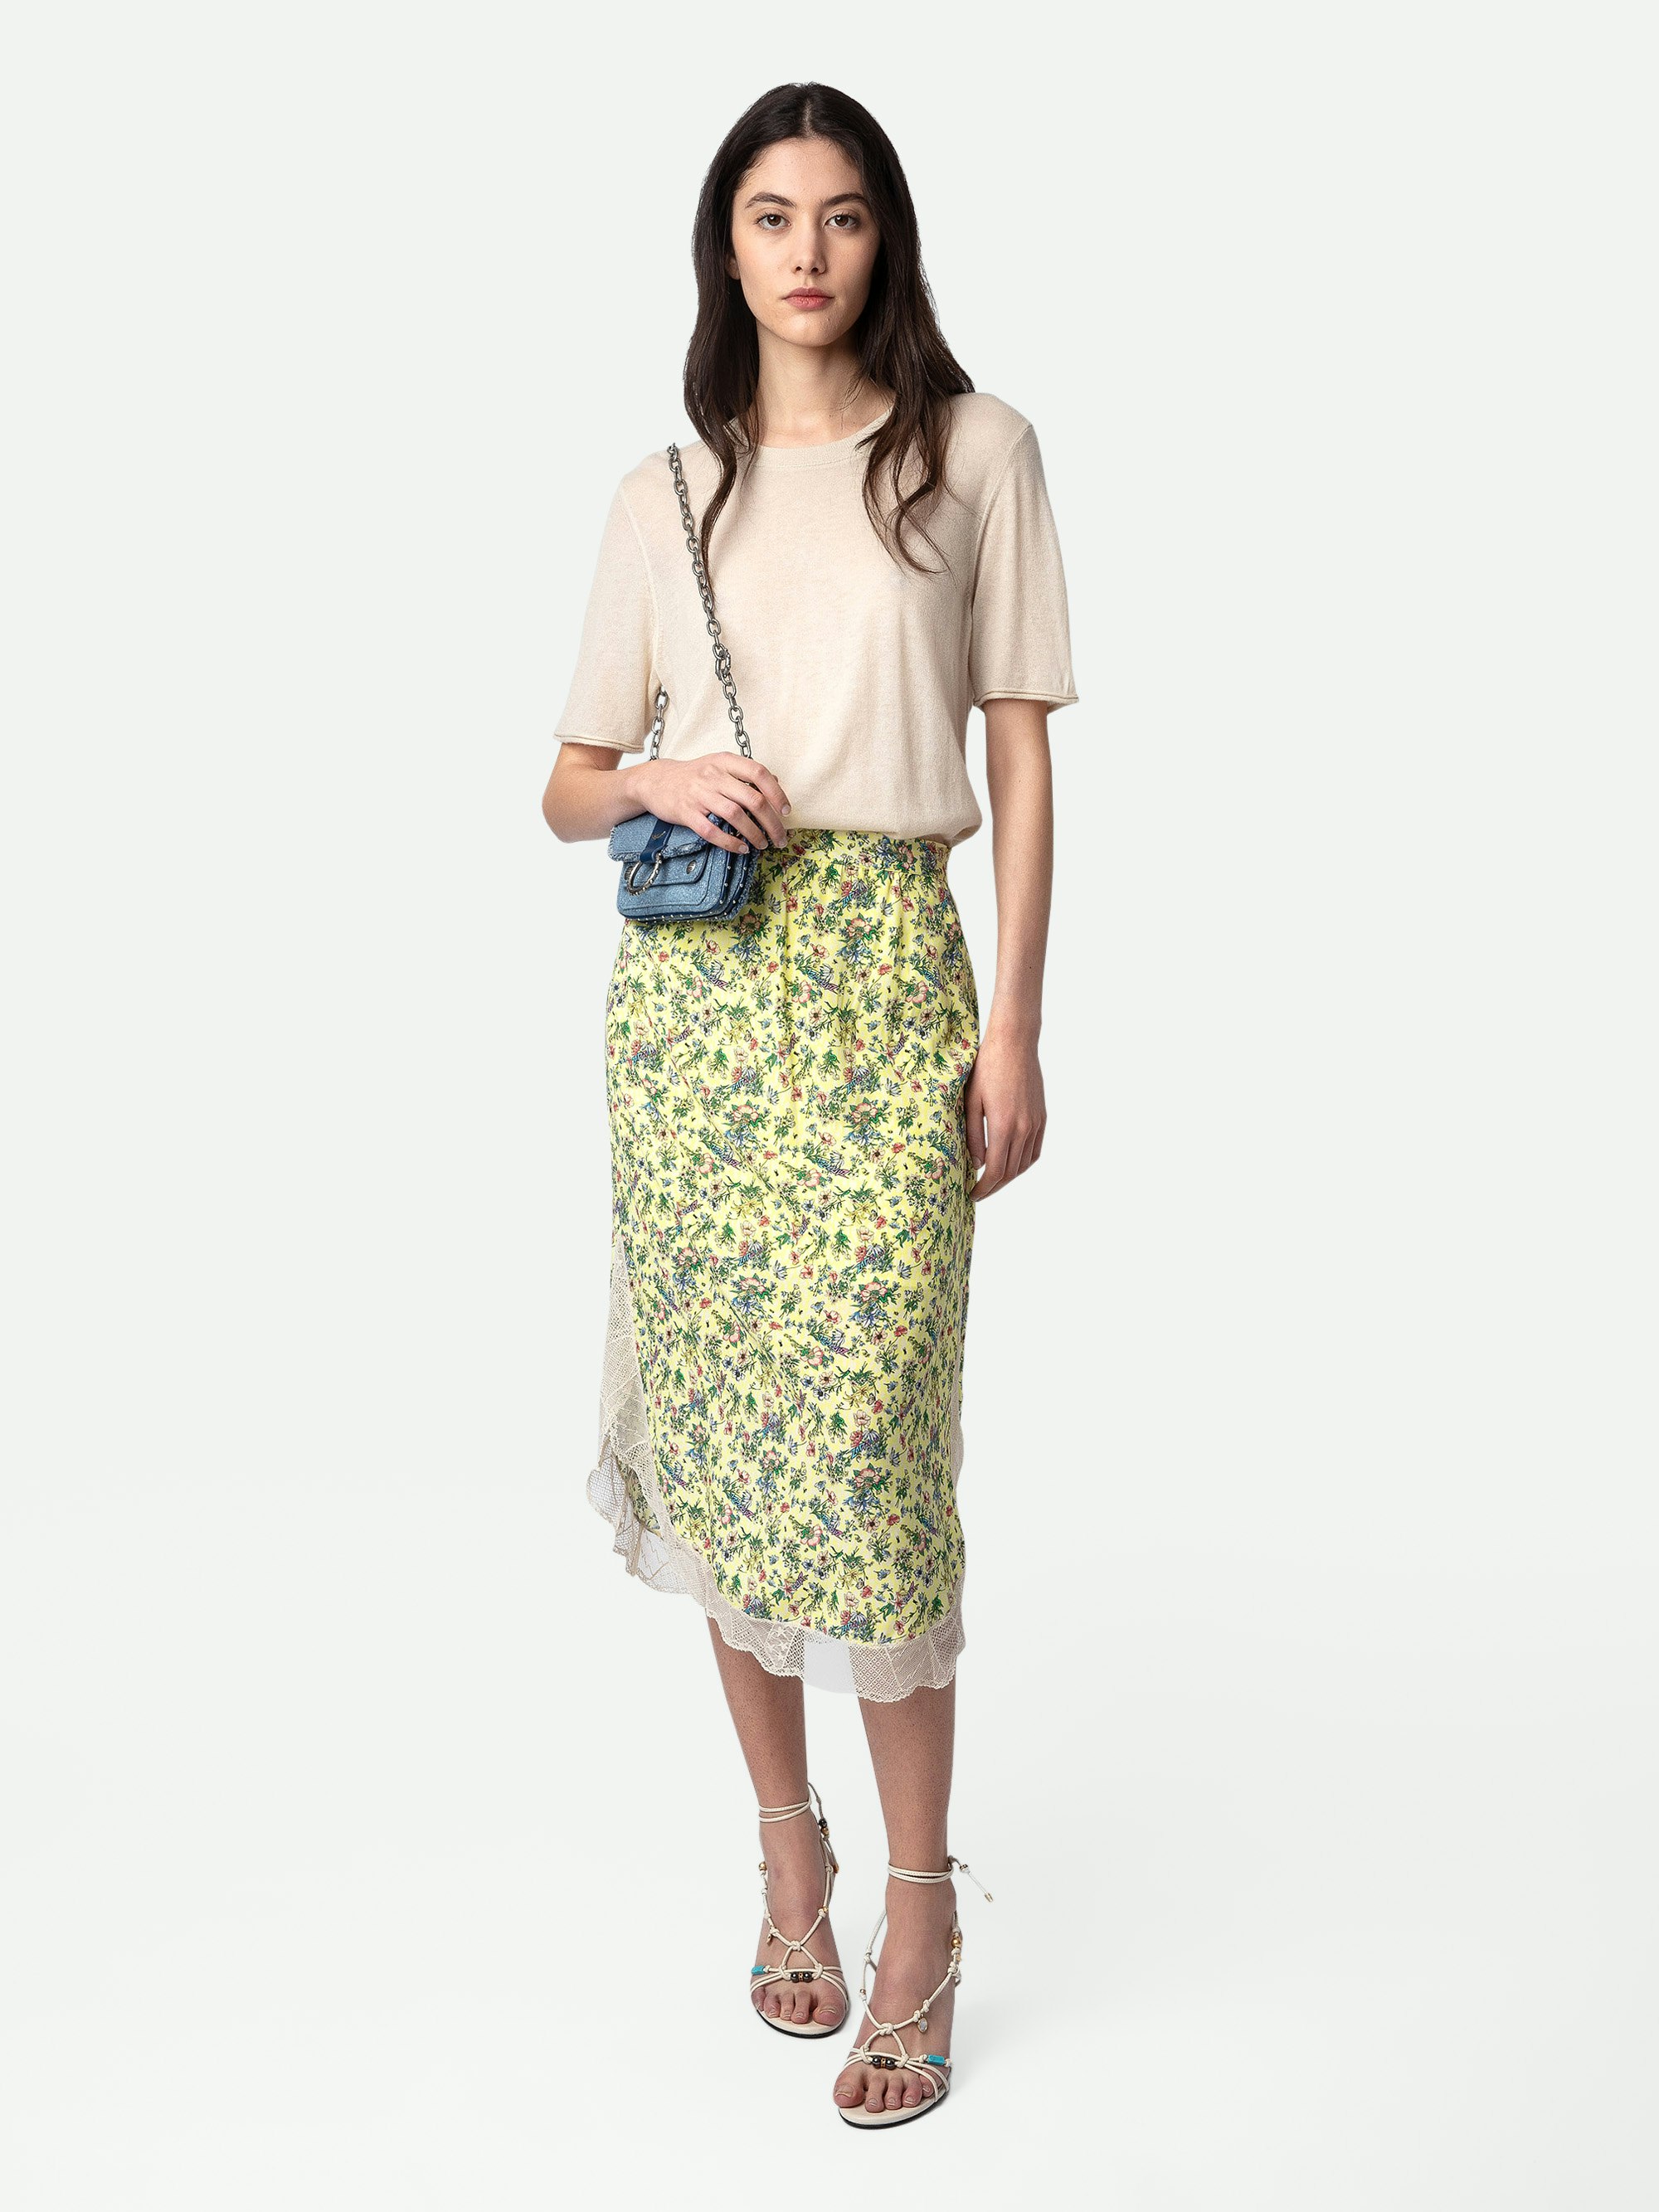 Joslina Skirt - Women's yellow floral midi skirt with lace hem.